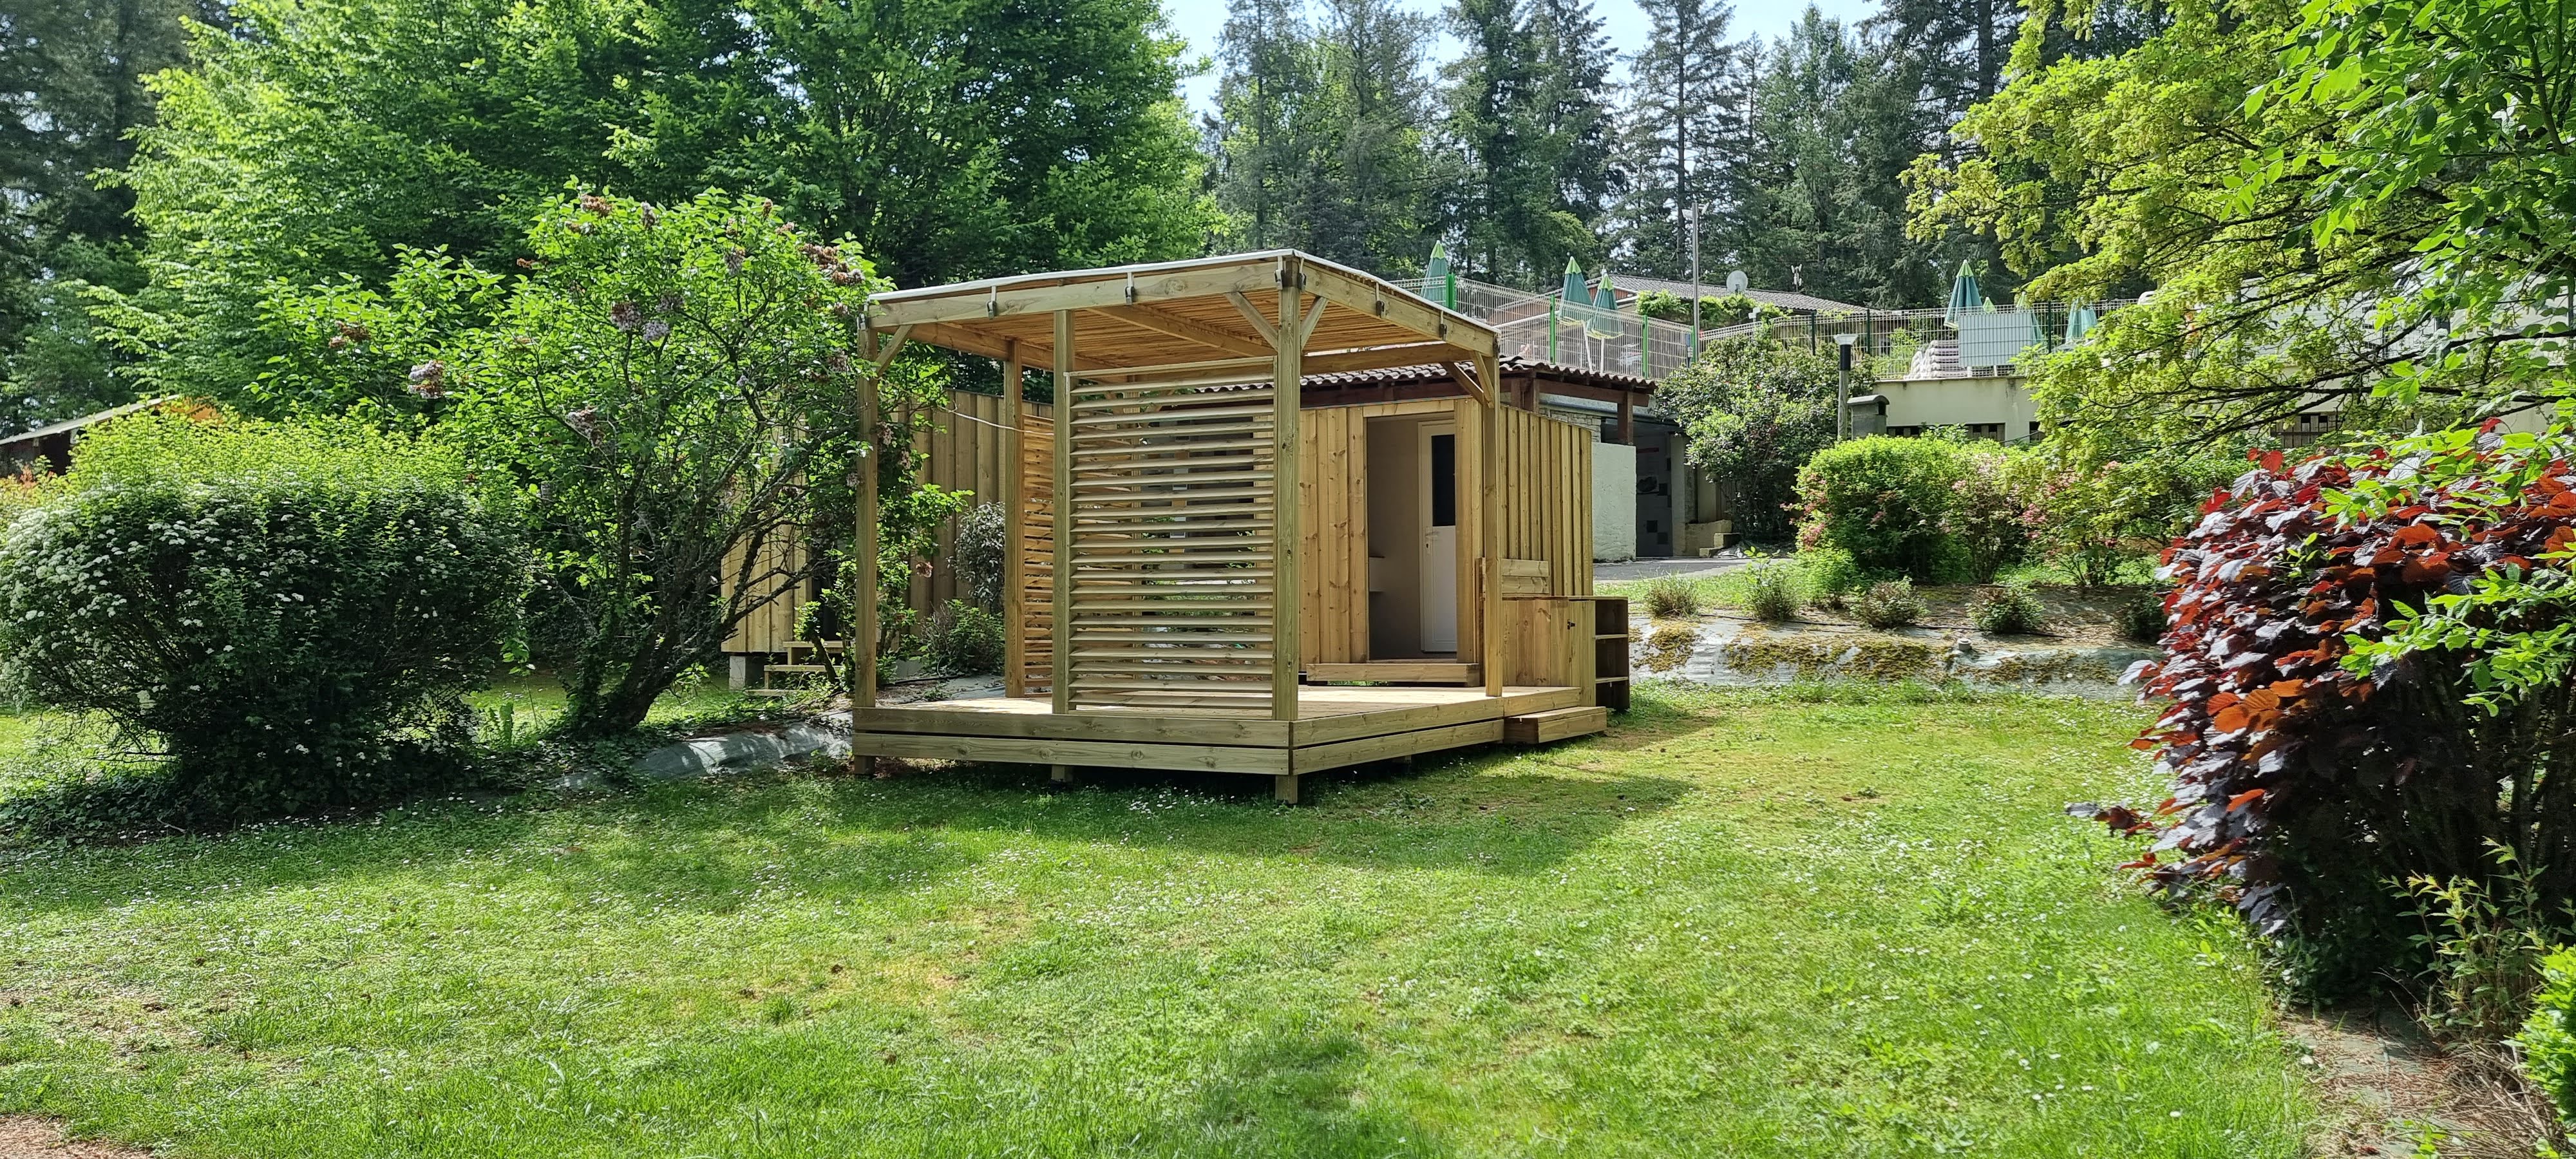 Emplacement - Emplacement Luxe Plus - Sanitaire Individuel + Terrasse - Camping Le Séquoia